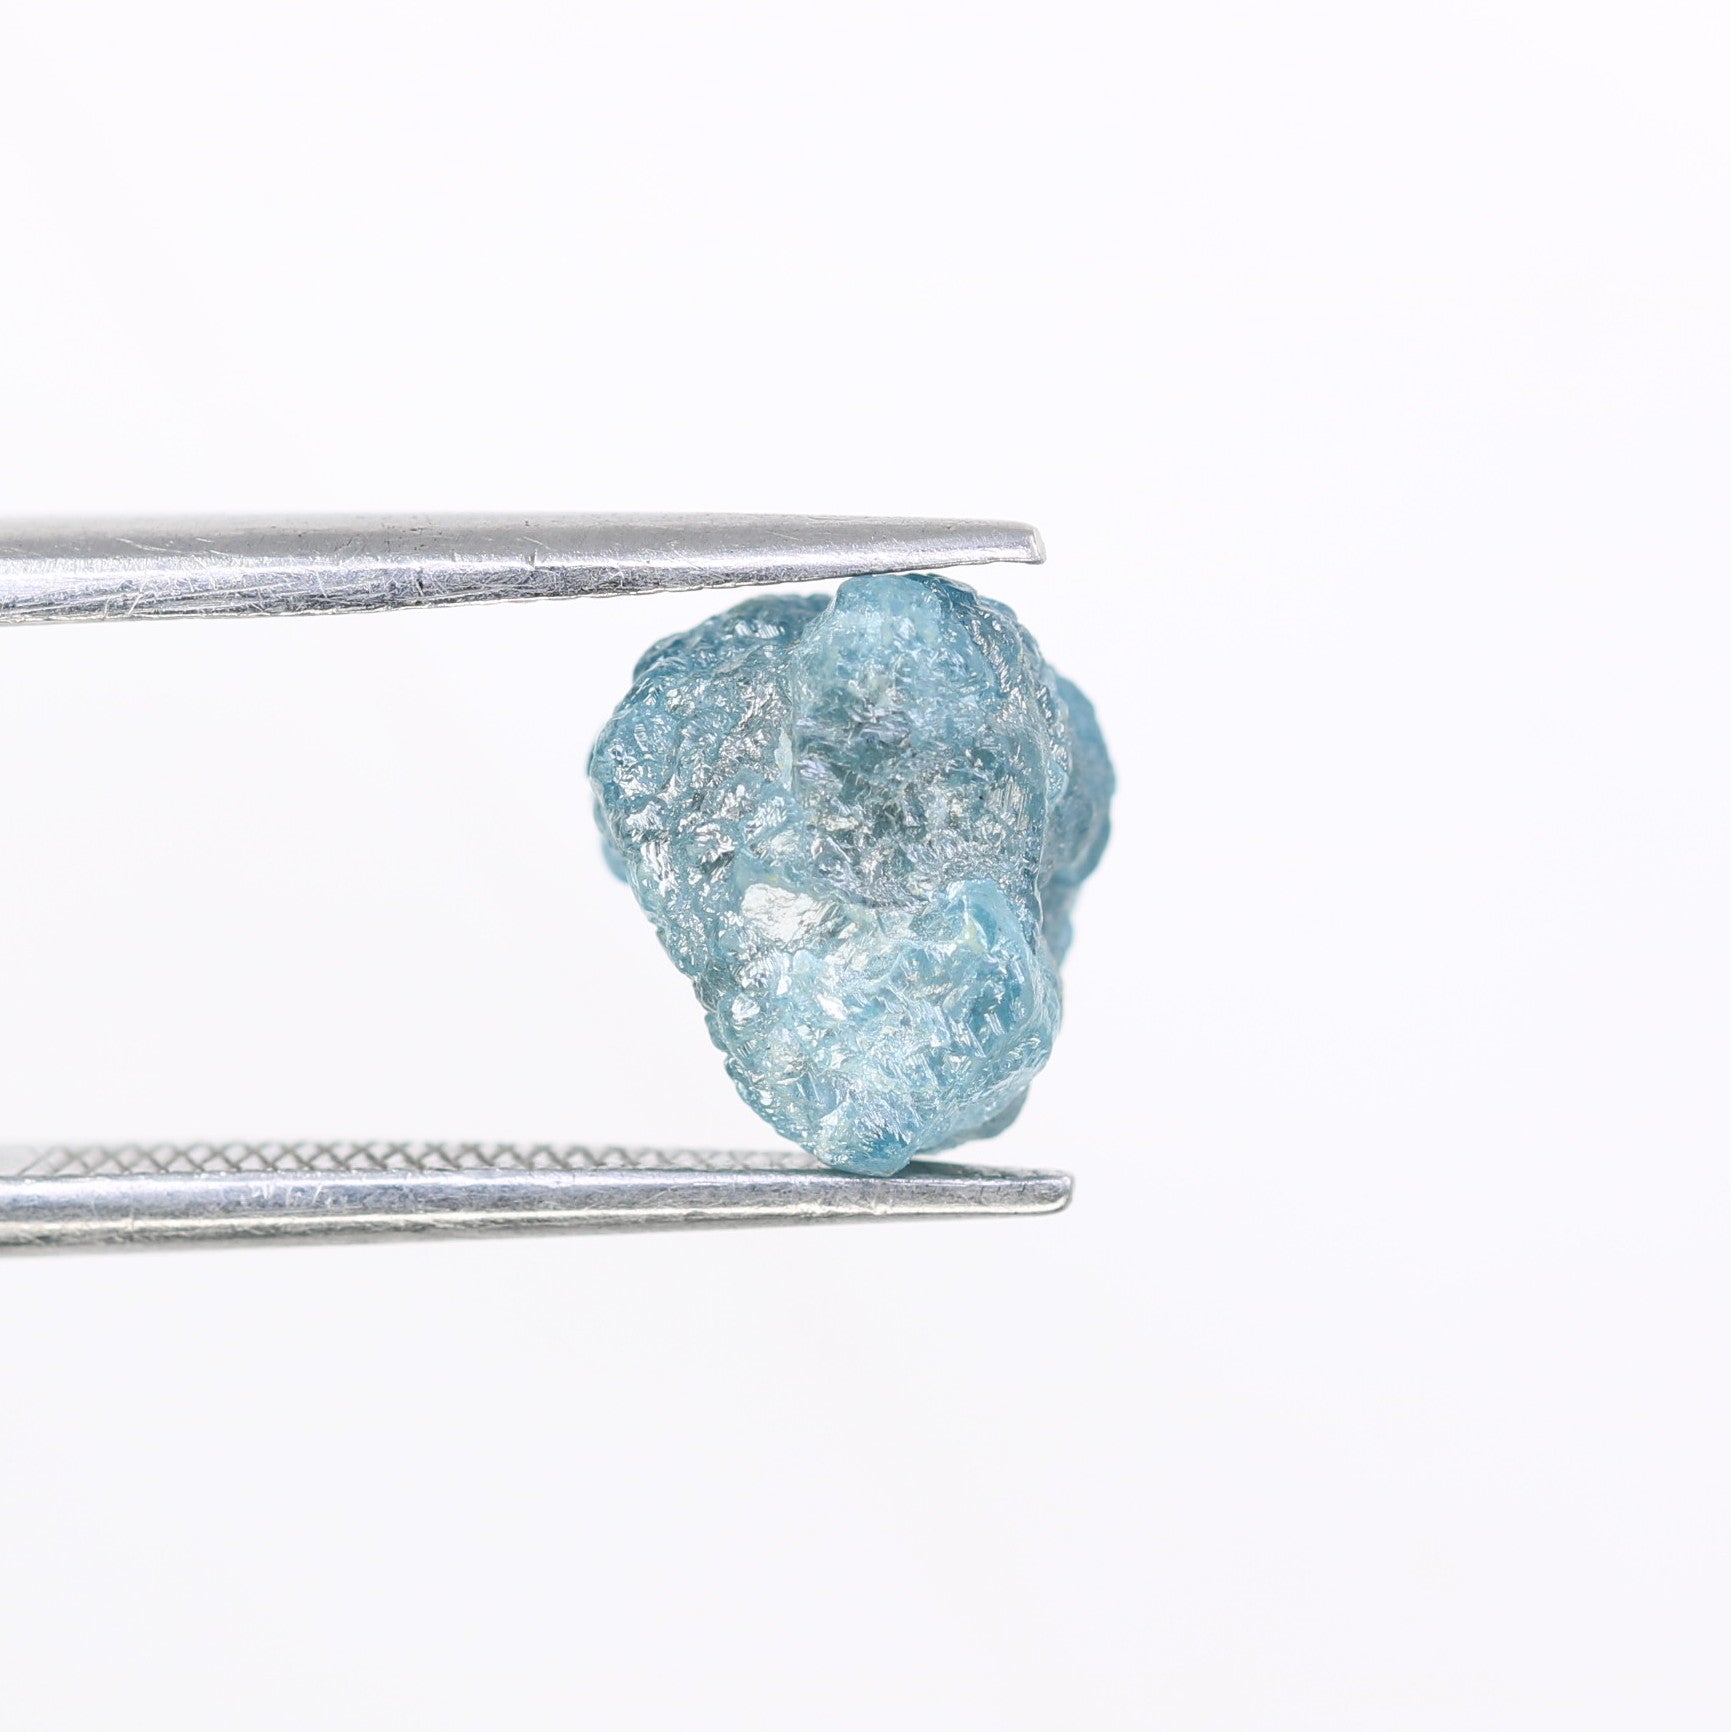 3.09 CT Irregular Cut Raw Rough Blue Diamond For Wedding Ring